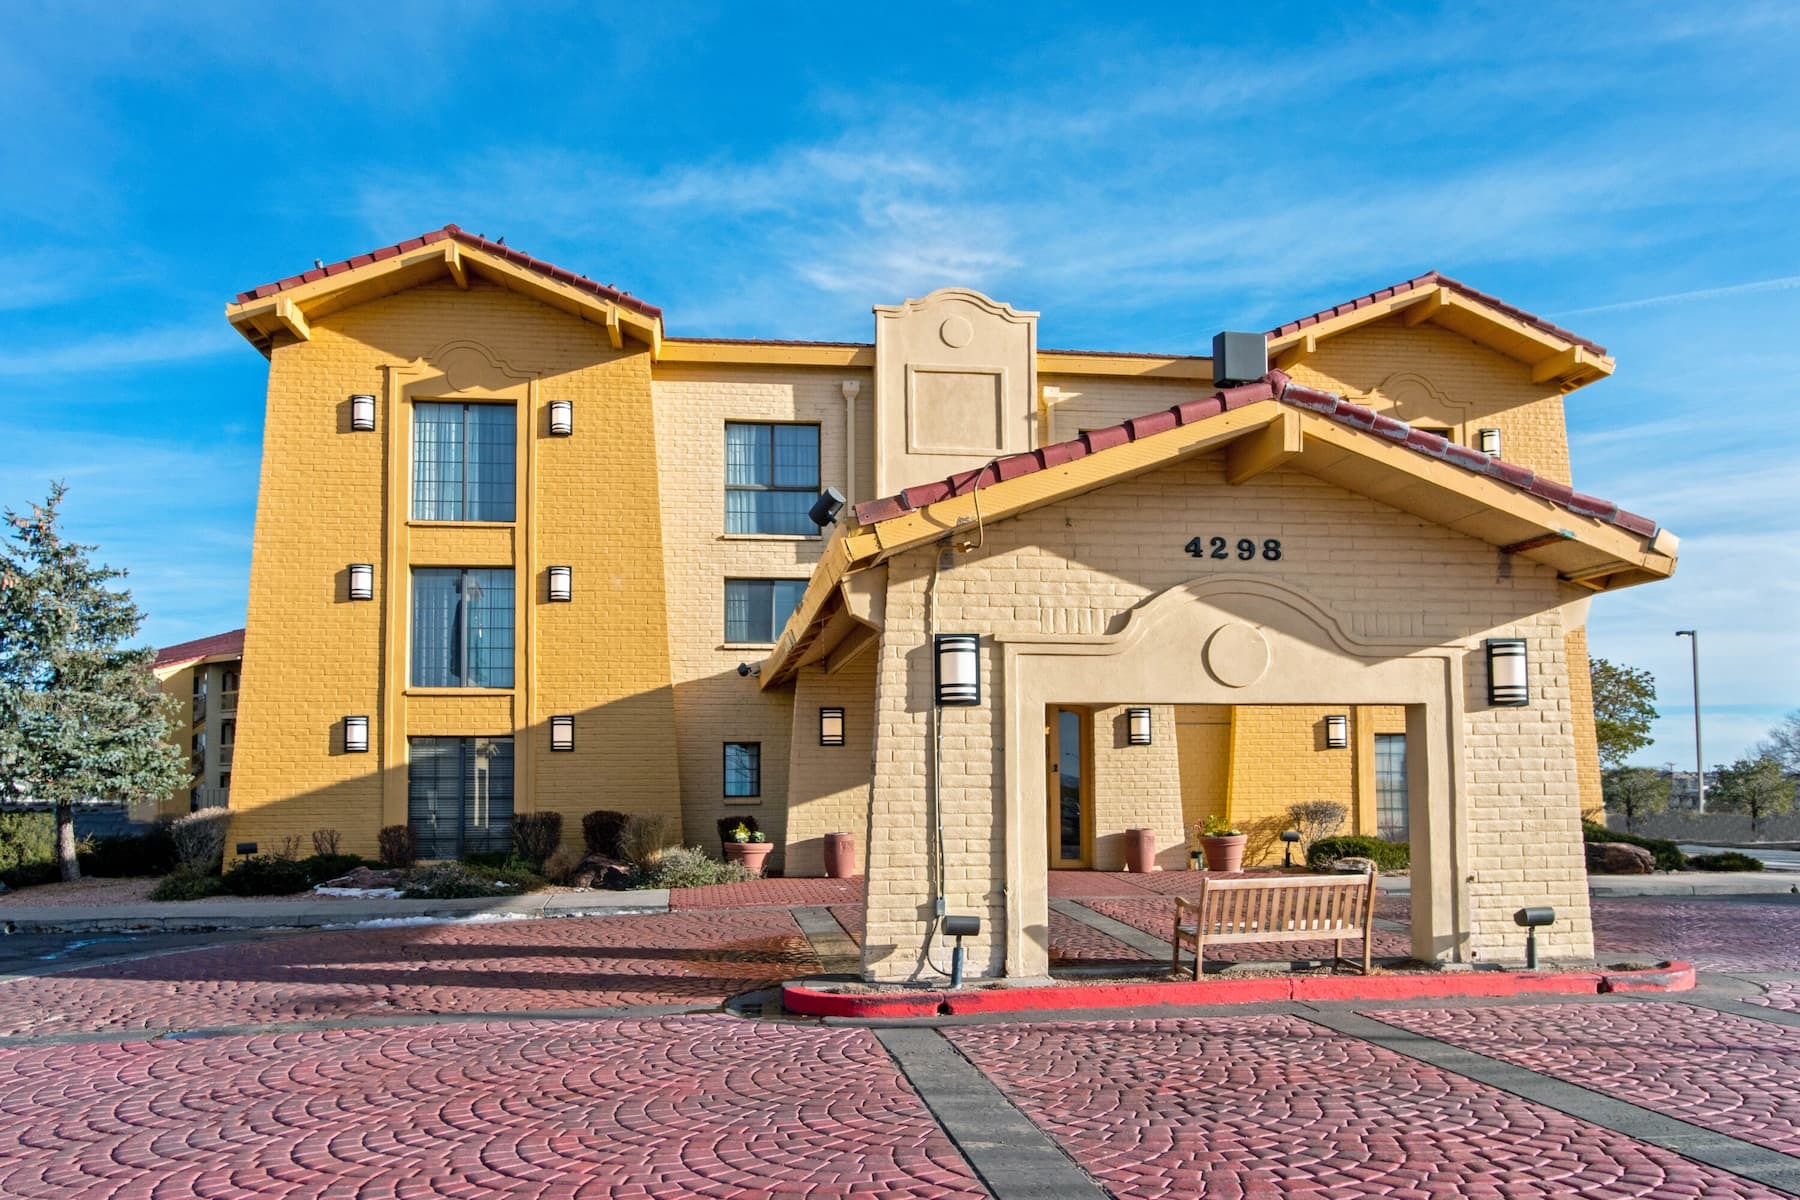 Photo of La Quinta Inn Santa Fe, Santa Fe, NM